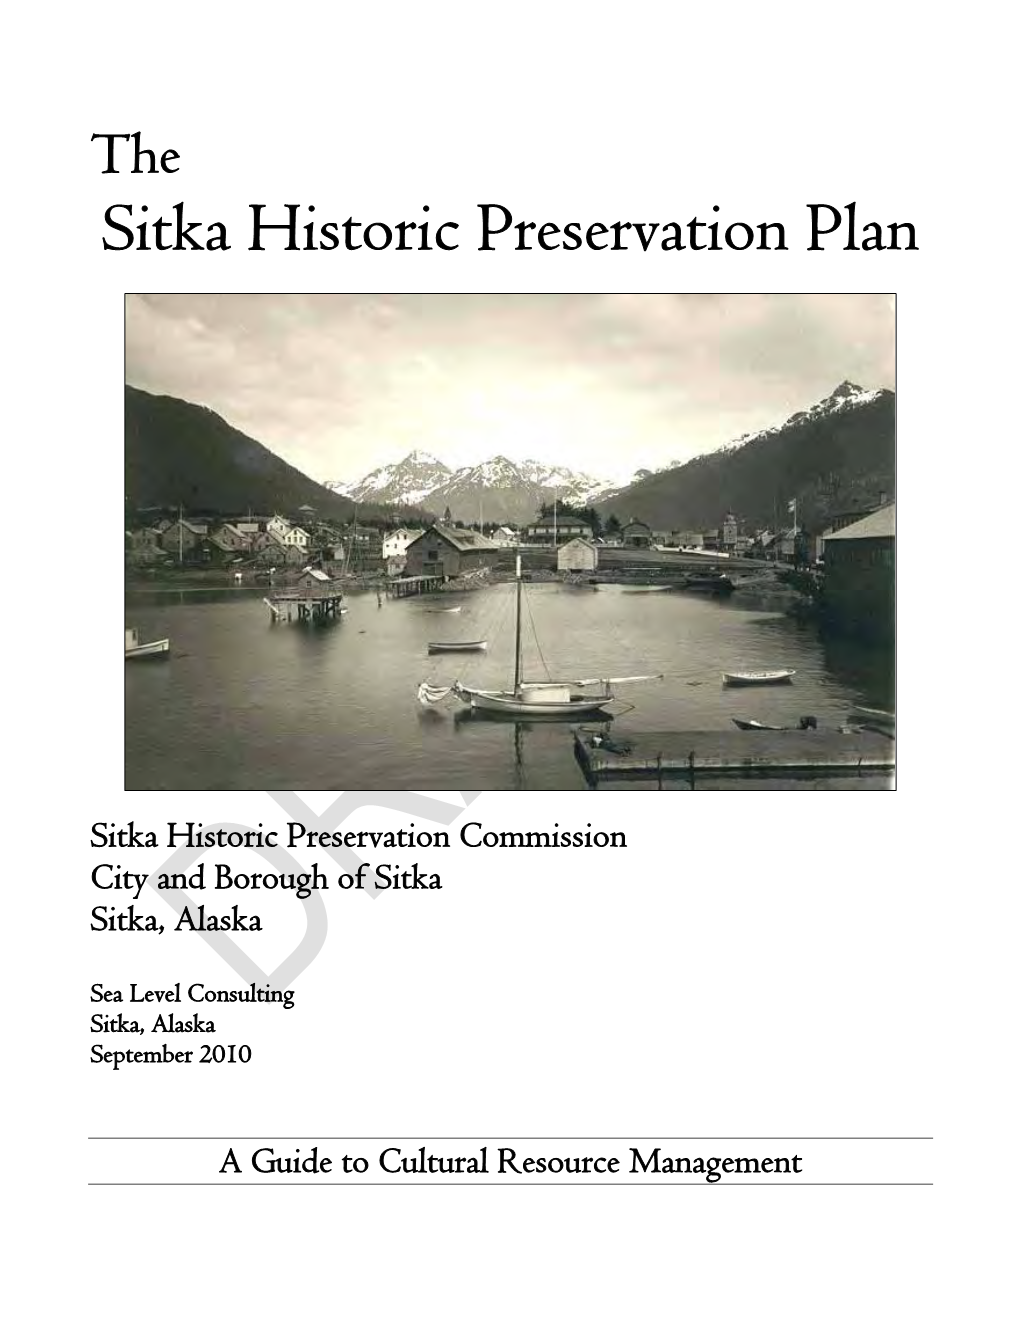 The Sitka Historic Preservation Plan